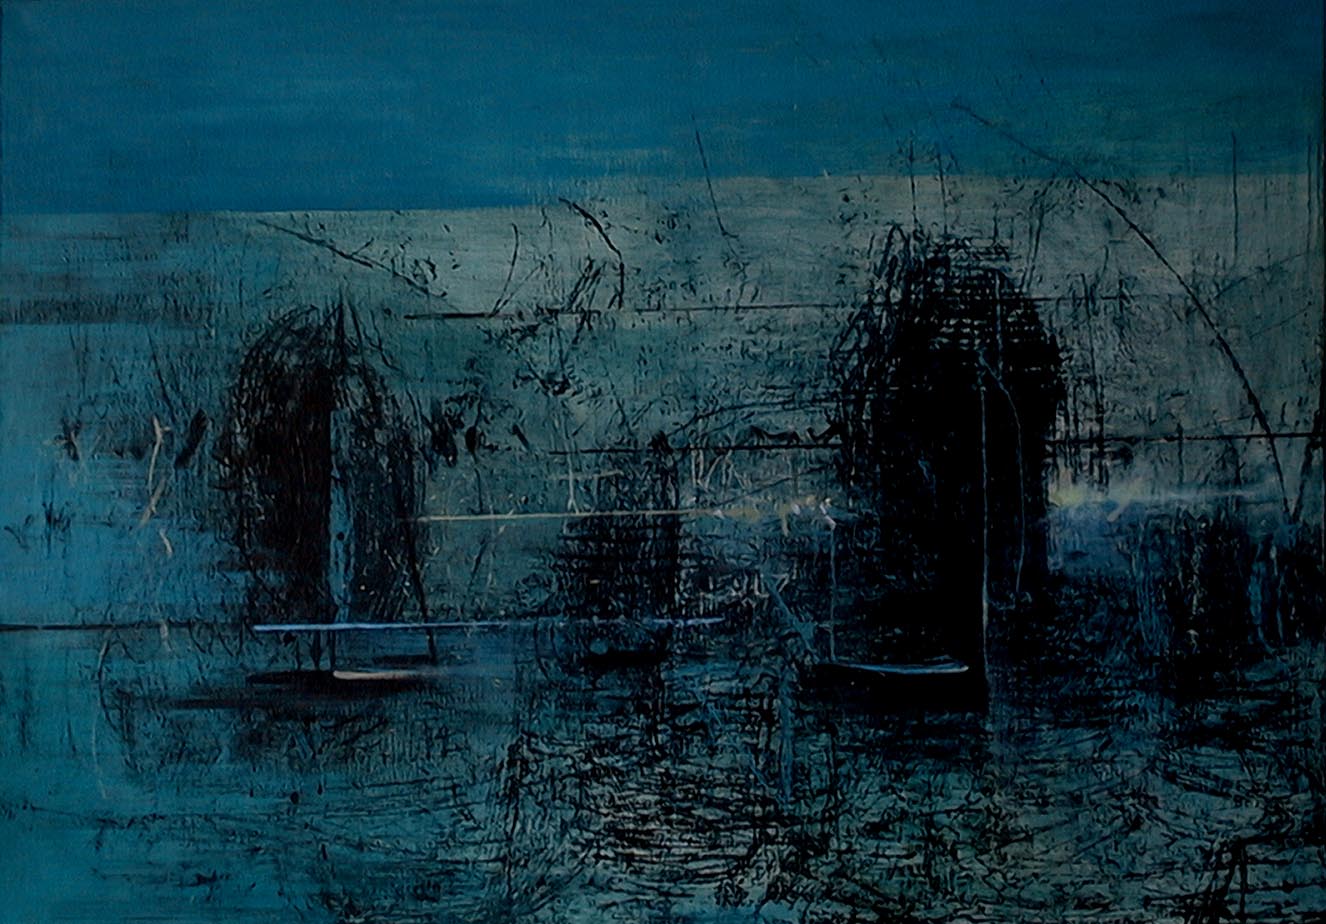 Mendrek Pawel 
"Life of the Horizon 16 Uhr 45", 2002
acrylic / canvas
100 x 140 cm